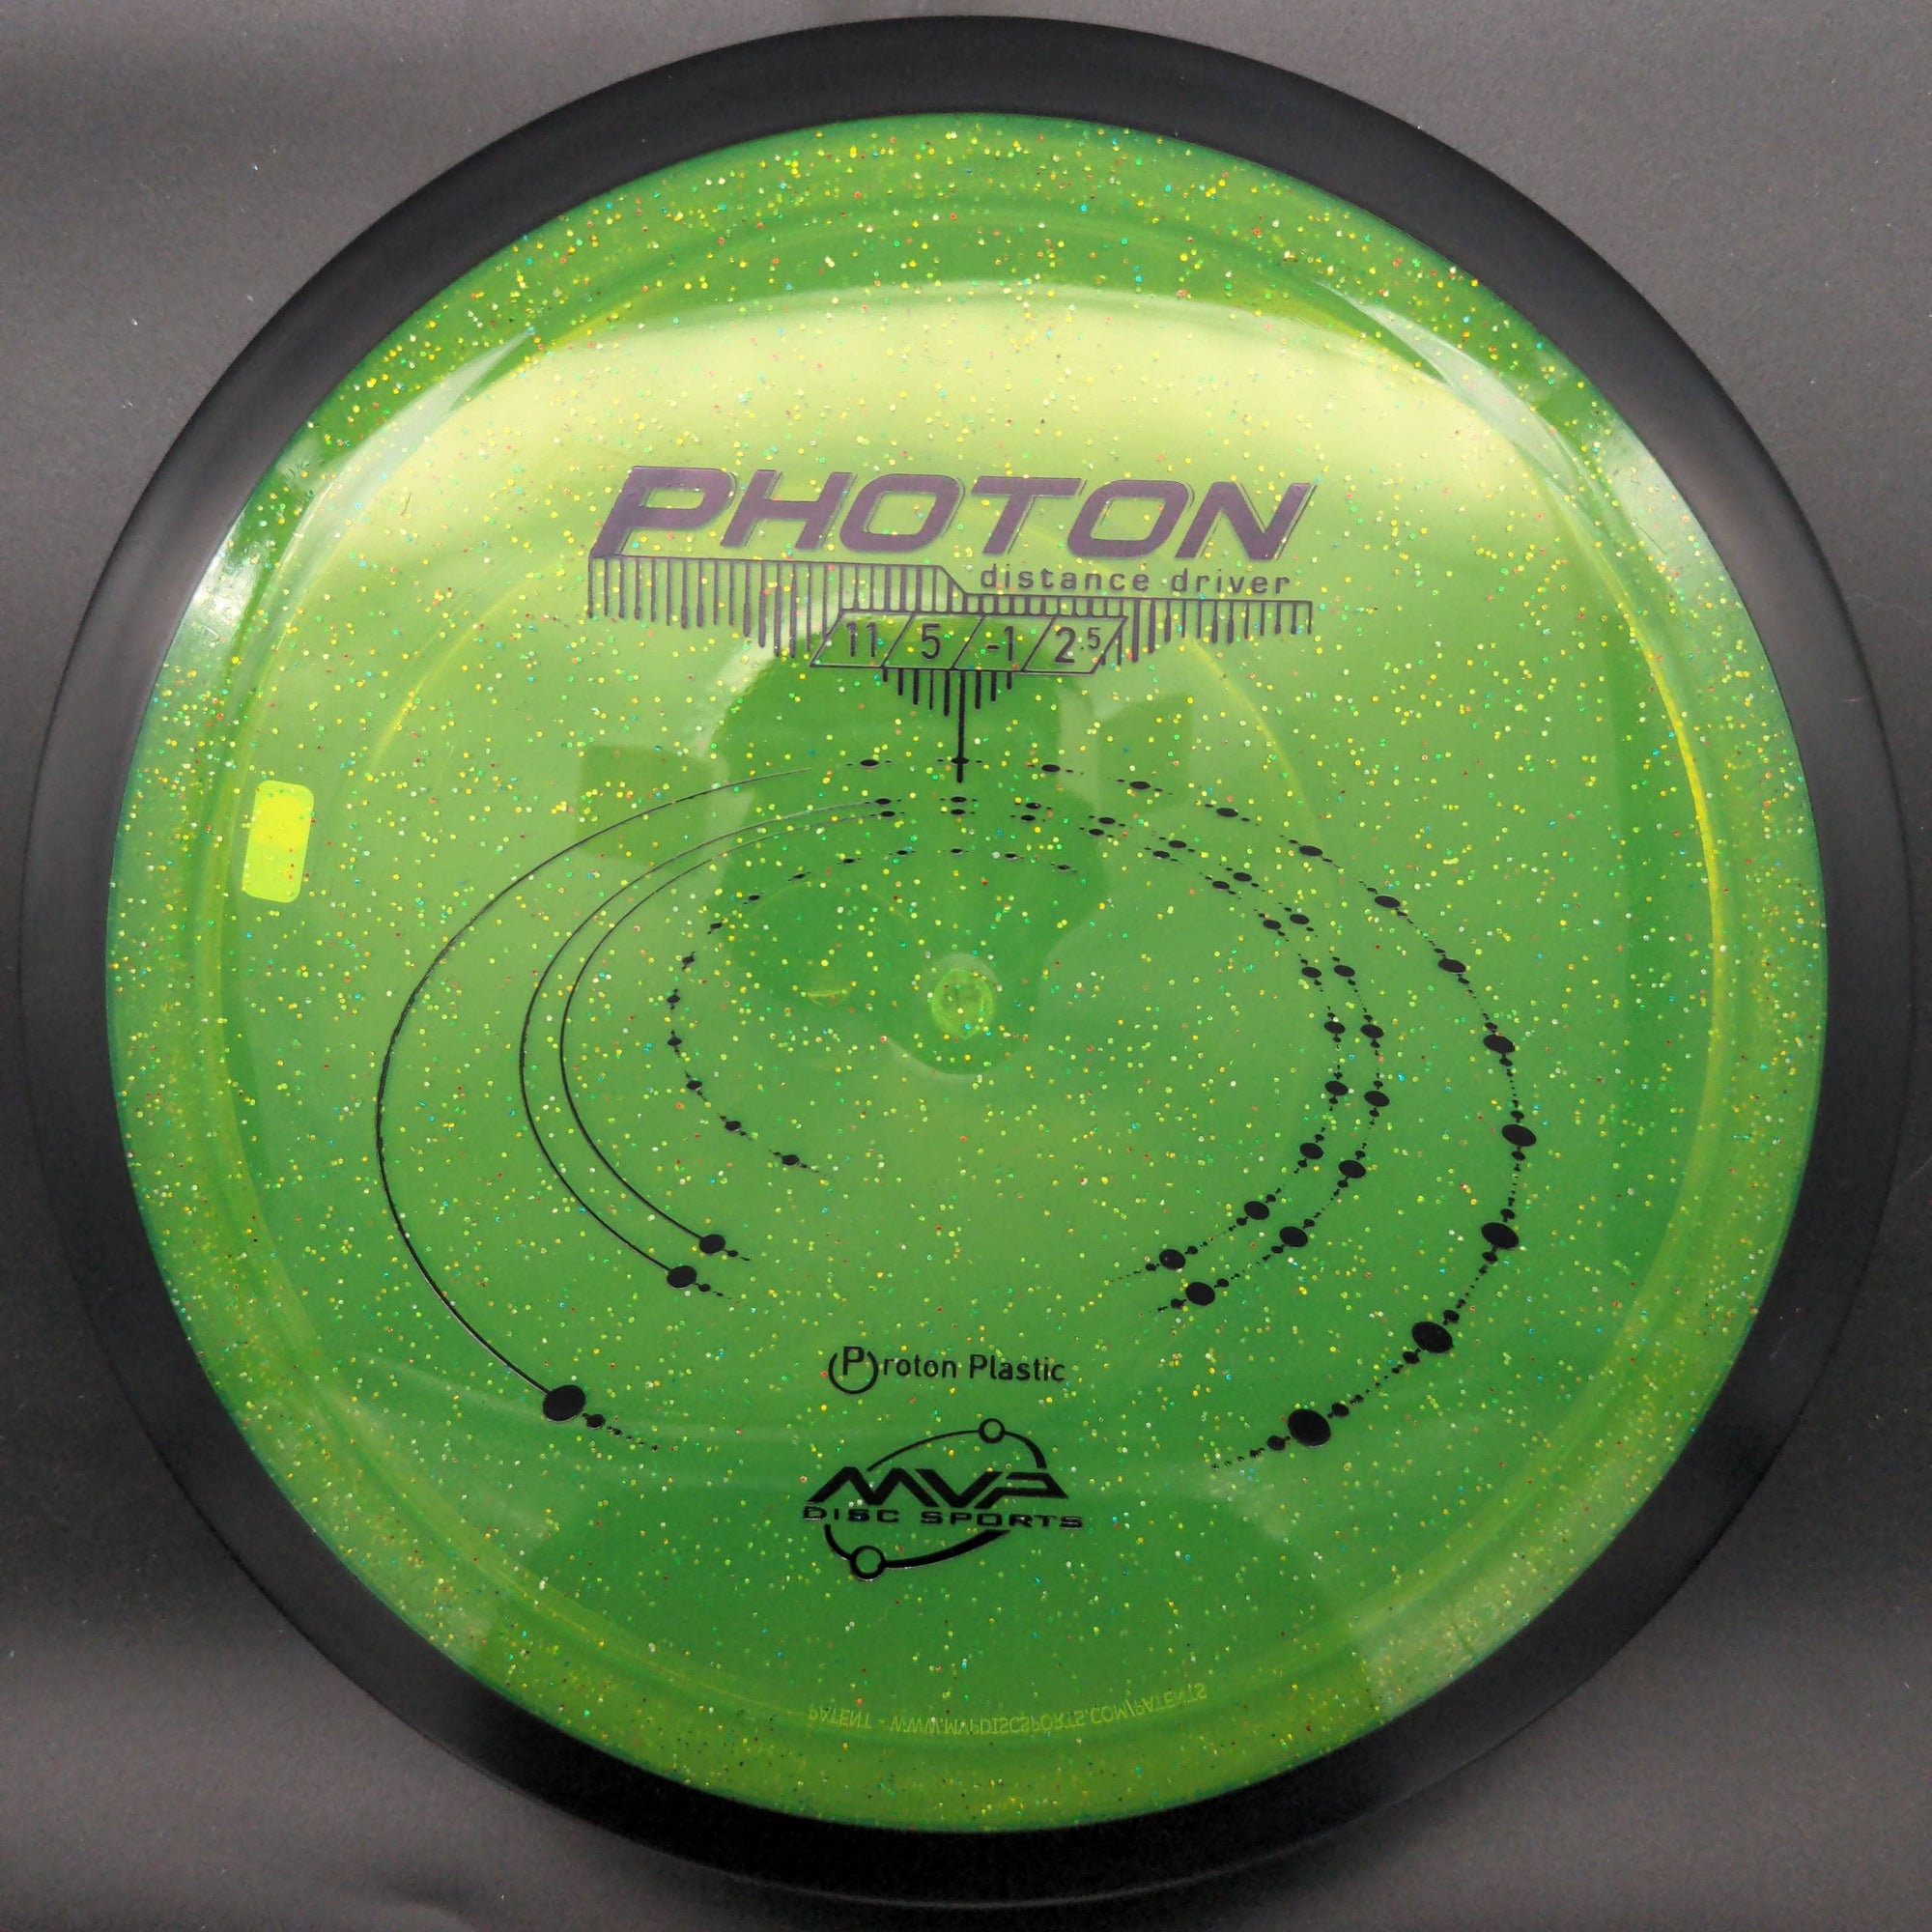 MVP Distance Driver Photon, Proton